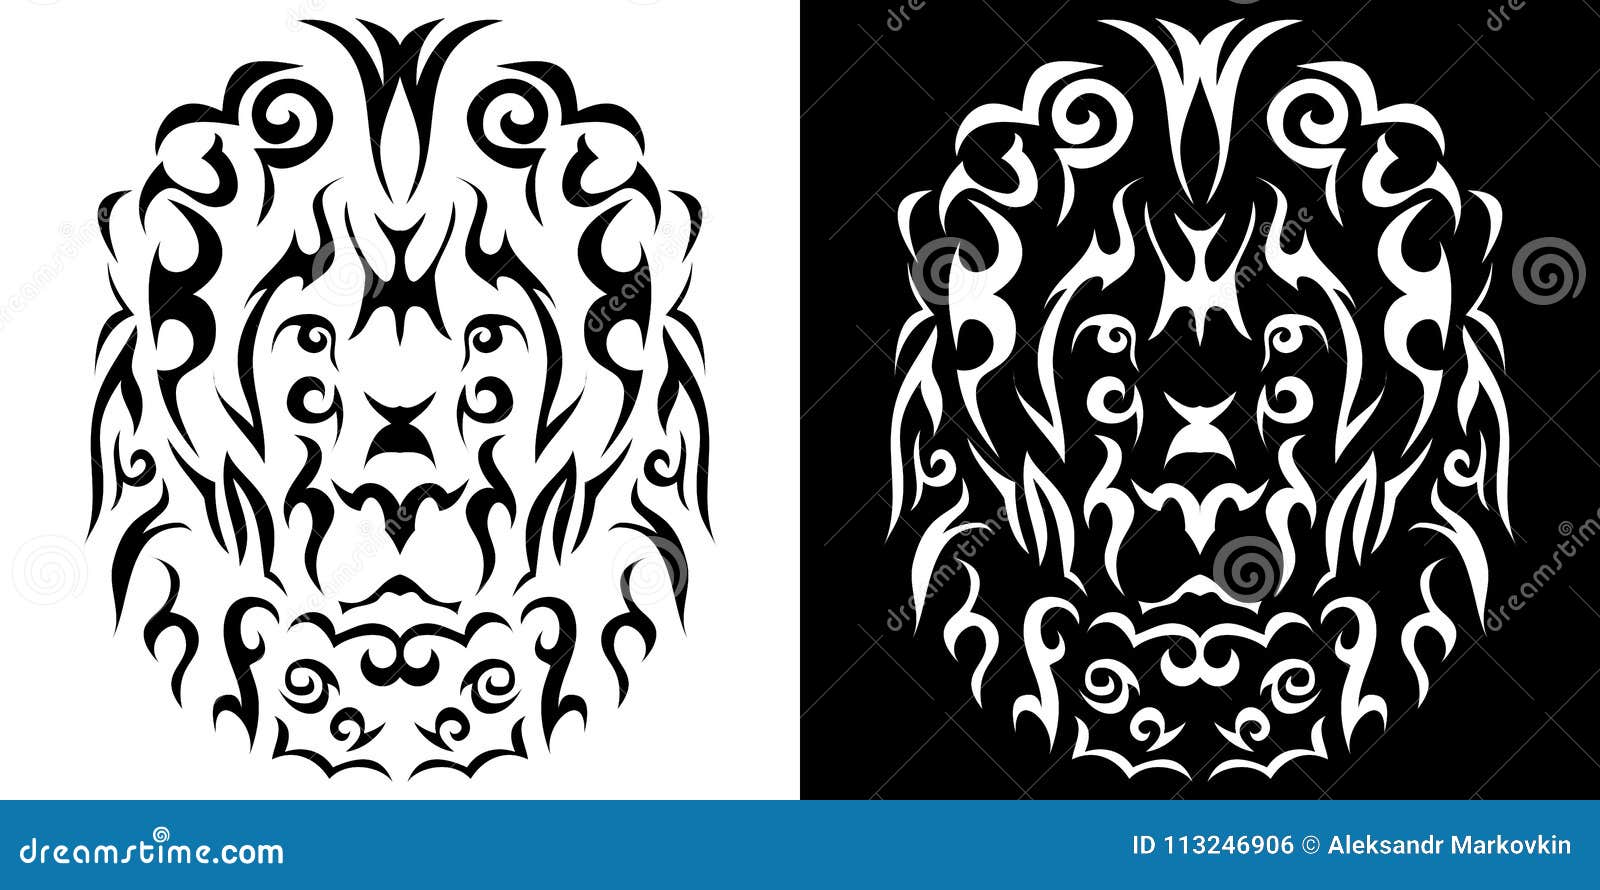 Tribal lion illustration stock vector. Illustration of colour - 113246906